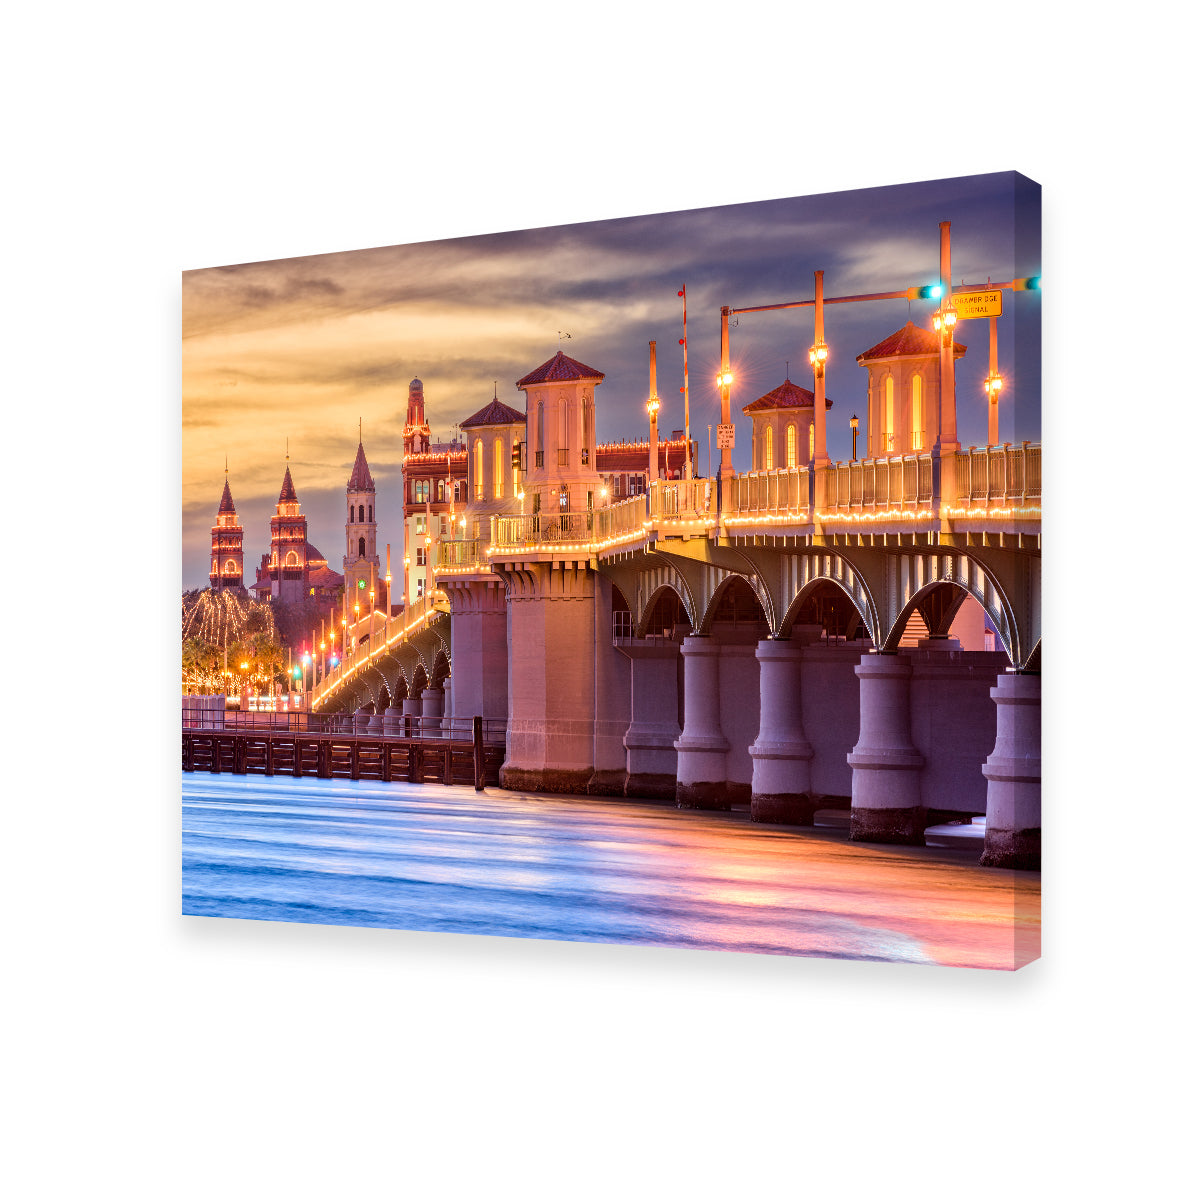 St. Augustine - Bridge of Lions